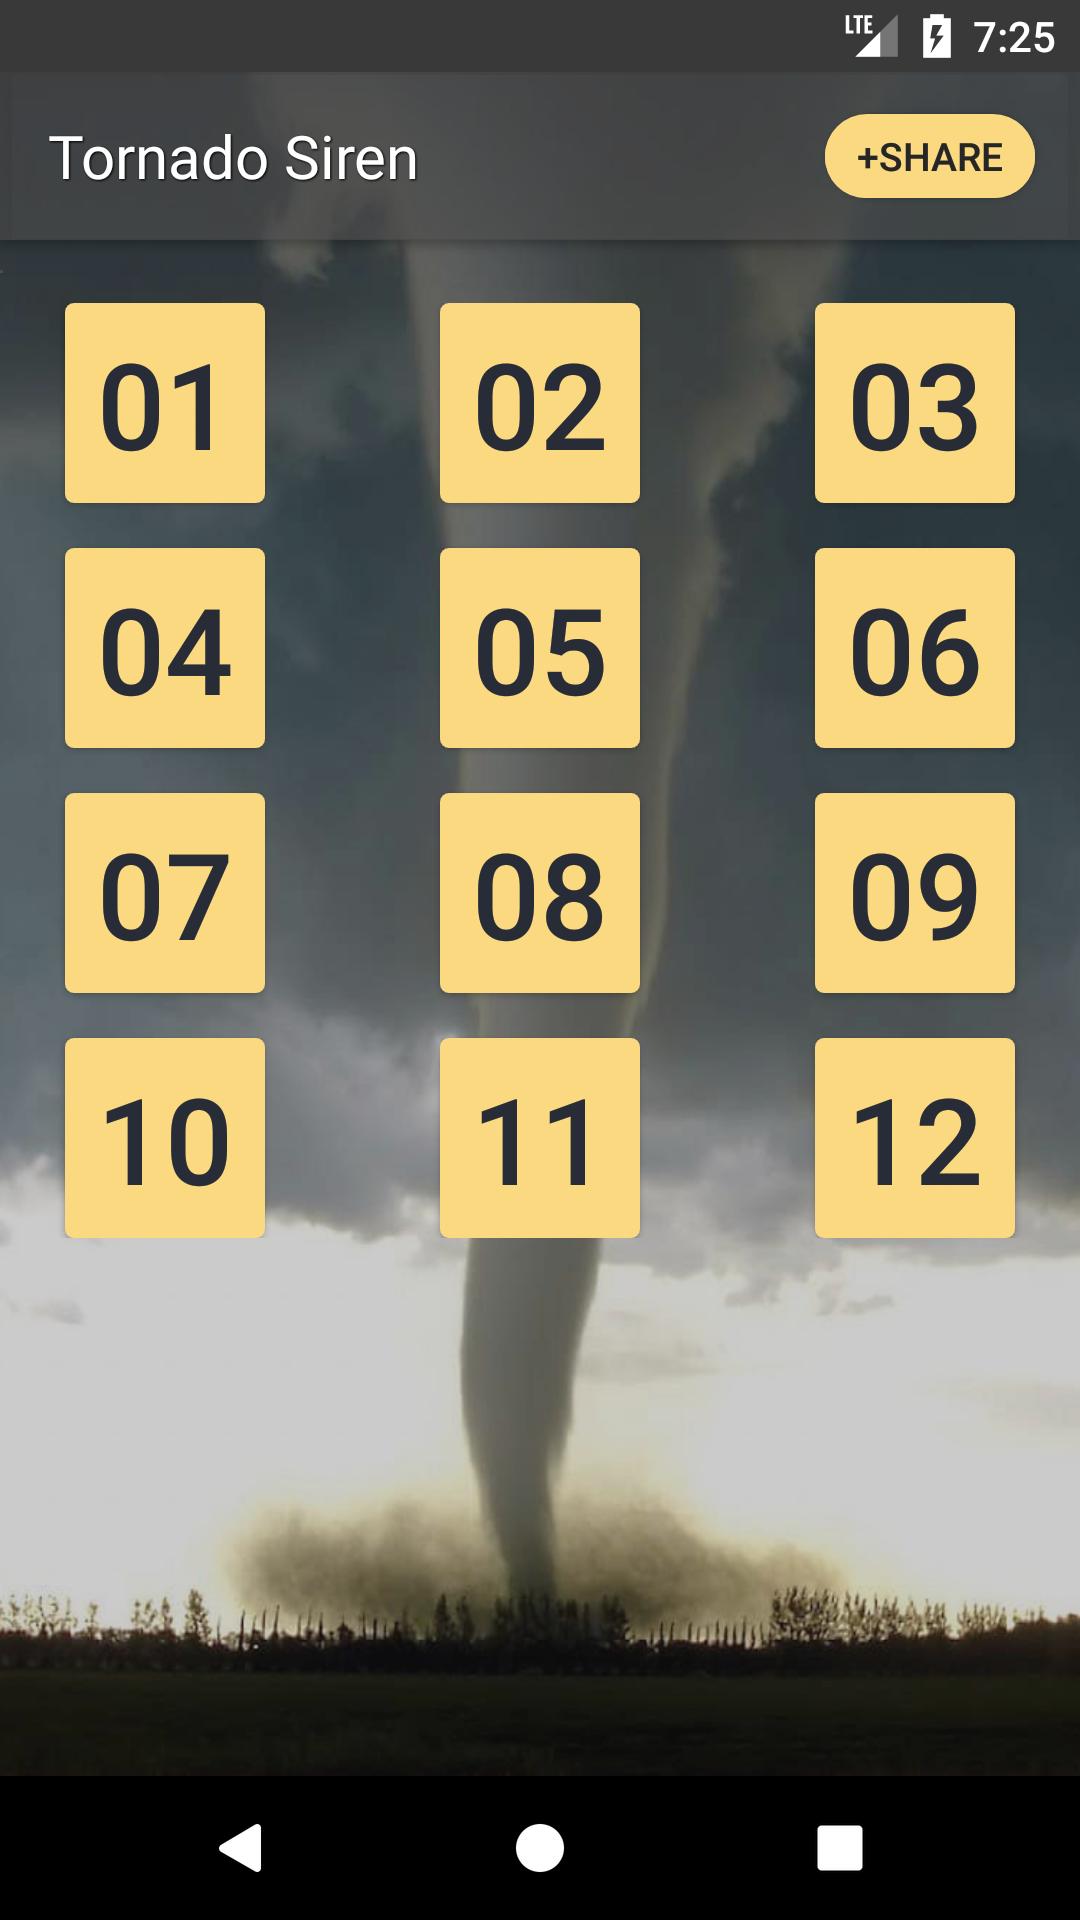 Tornado Warning Siren Sound Effect & Ringtones for Android - APK Download